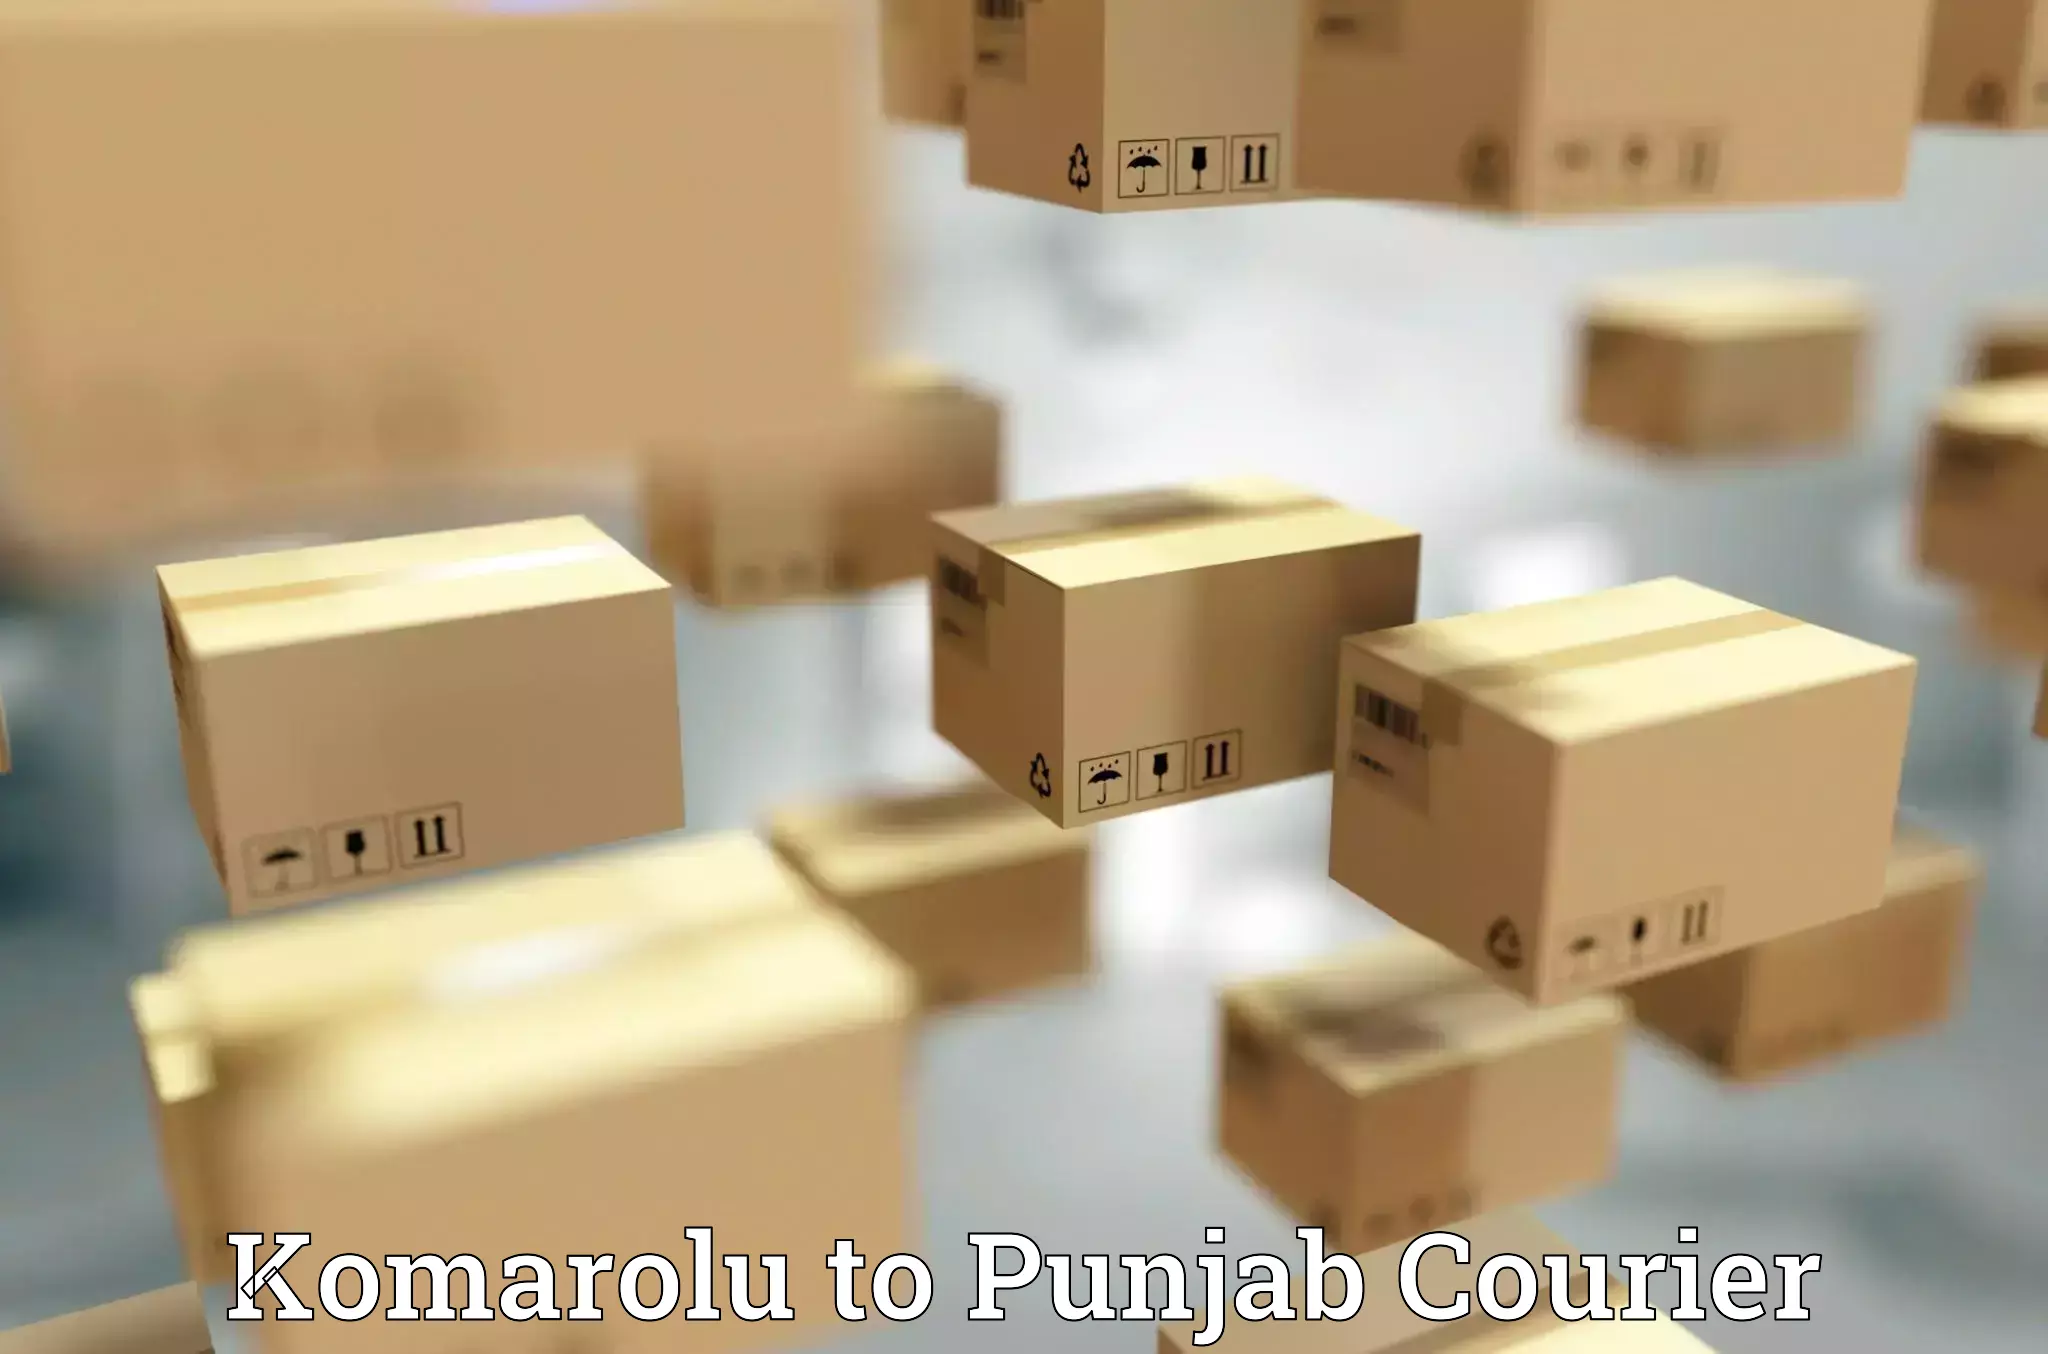 User-friendly courier app Komarolu to Jalalabad